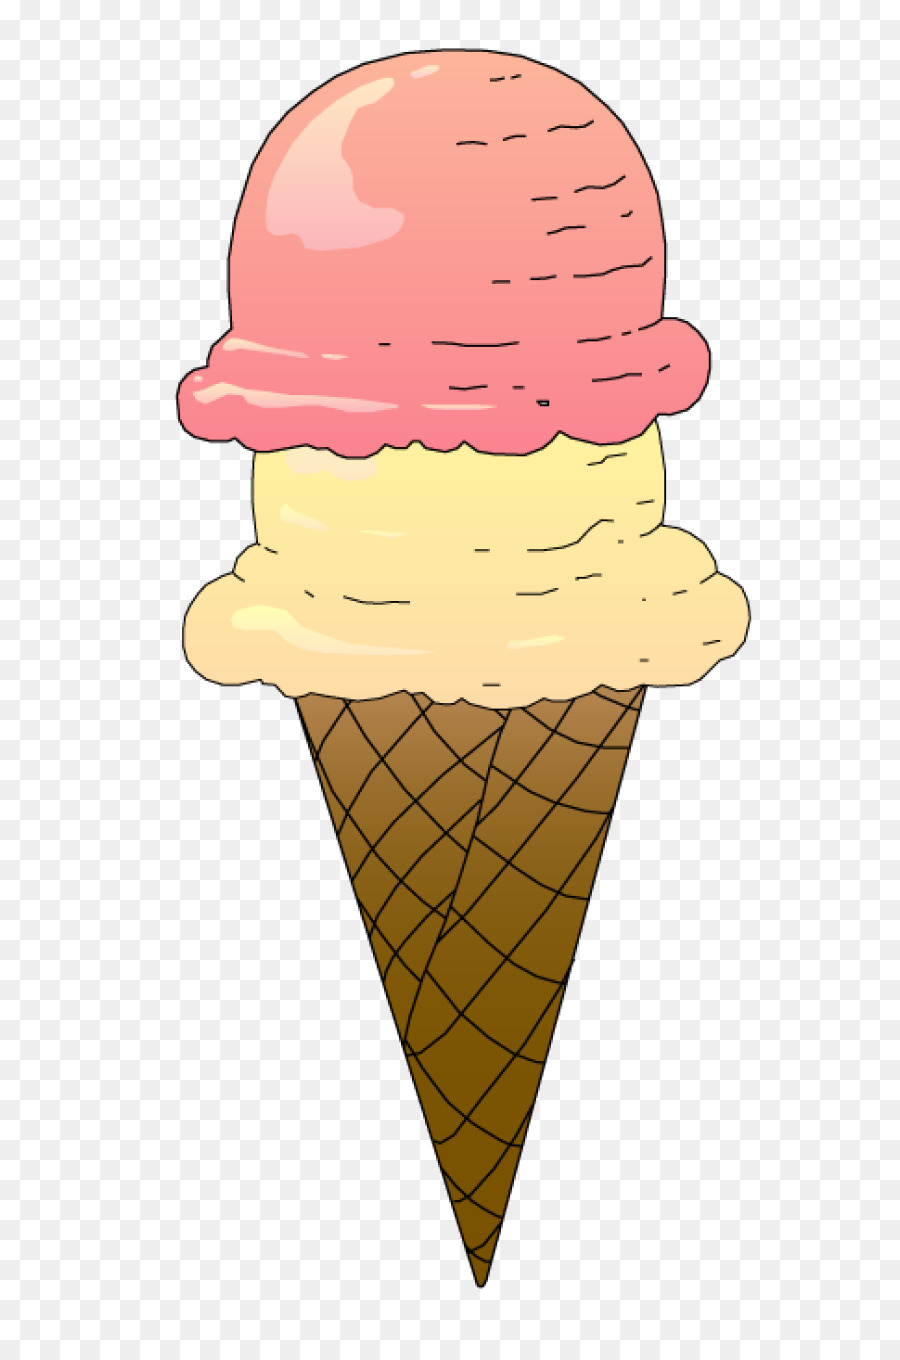 Cartoon Ice Cream Cone / How to Draw a Cartoon ICE CREAM CONE - YouTube